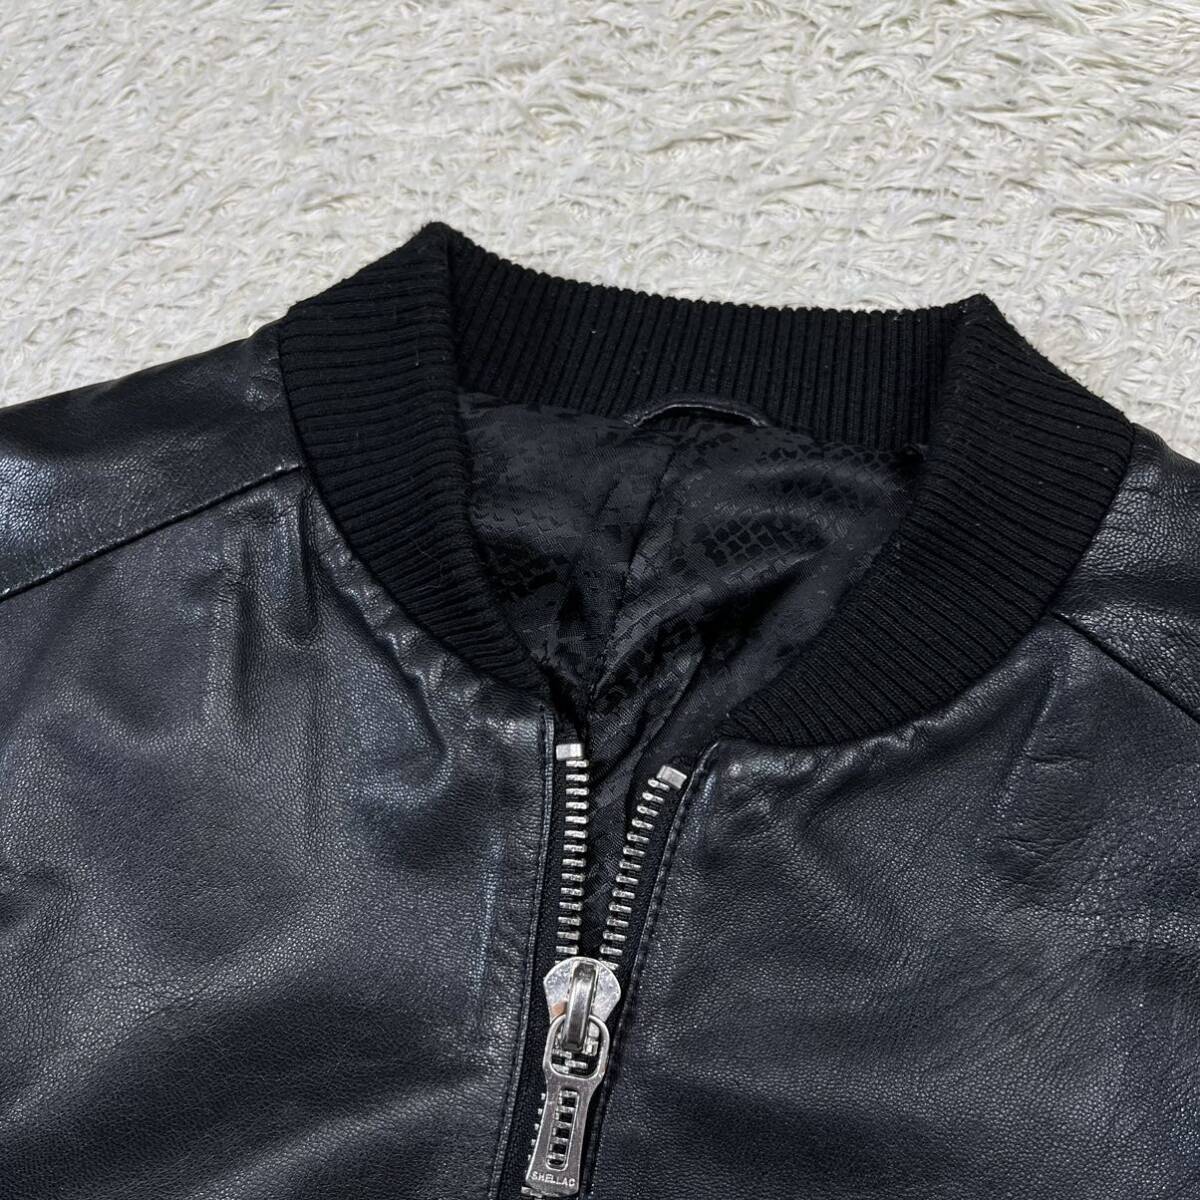  shellac [. height. go-to leather ]SHELLAC leather jacket Rider's blouson .. leather original leather python print black black 